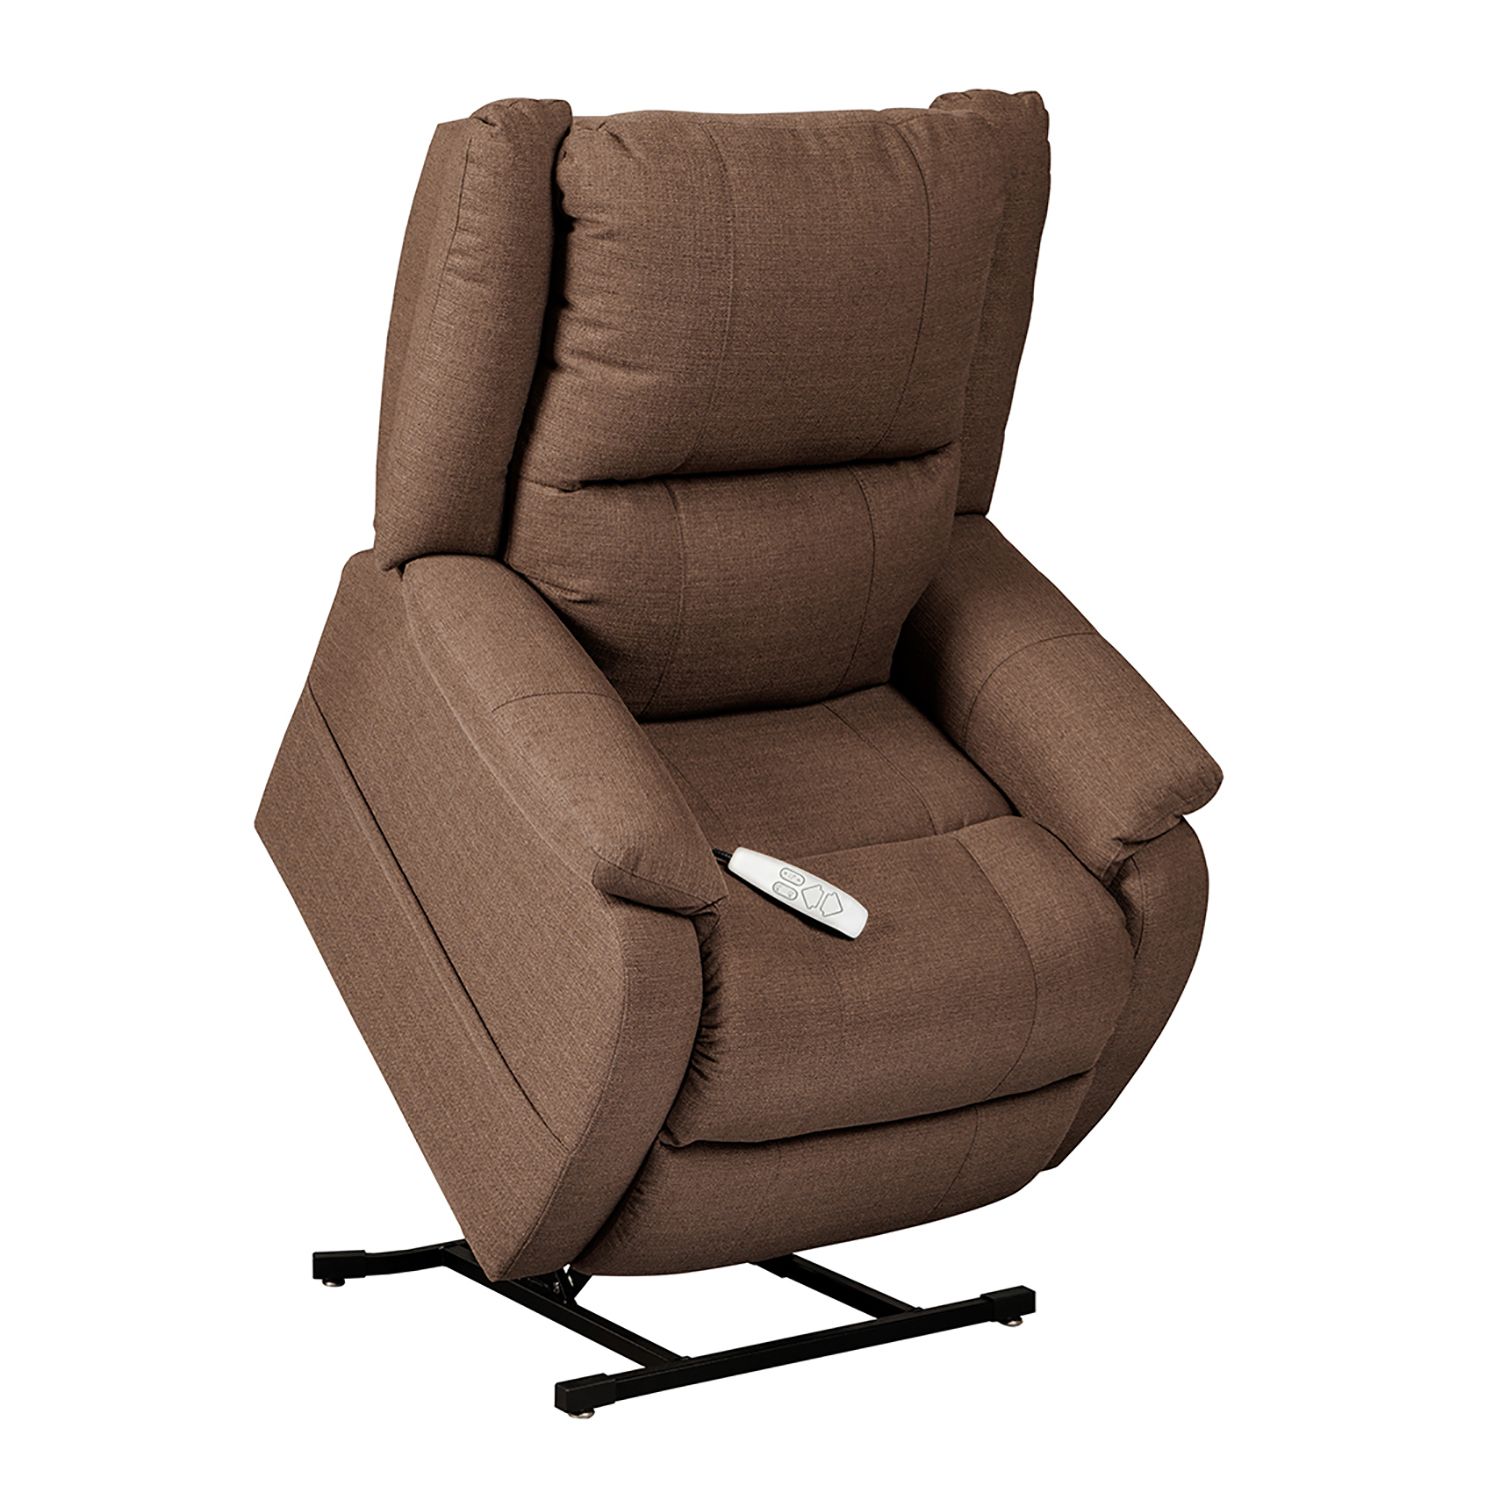 Member’s Mark Power Recline & Lift Chair with Adjustable Headrest